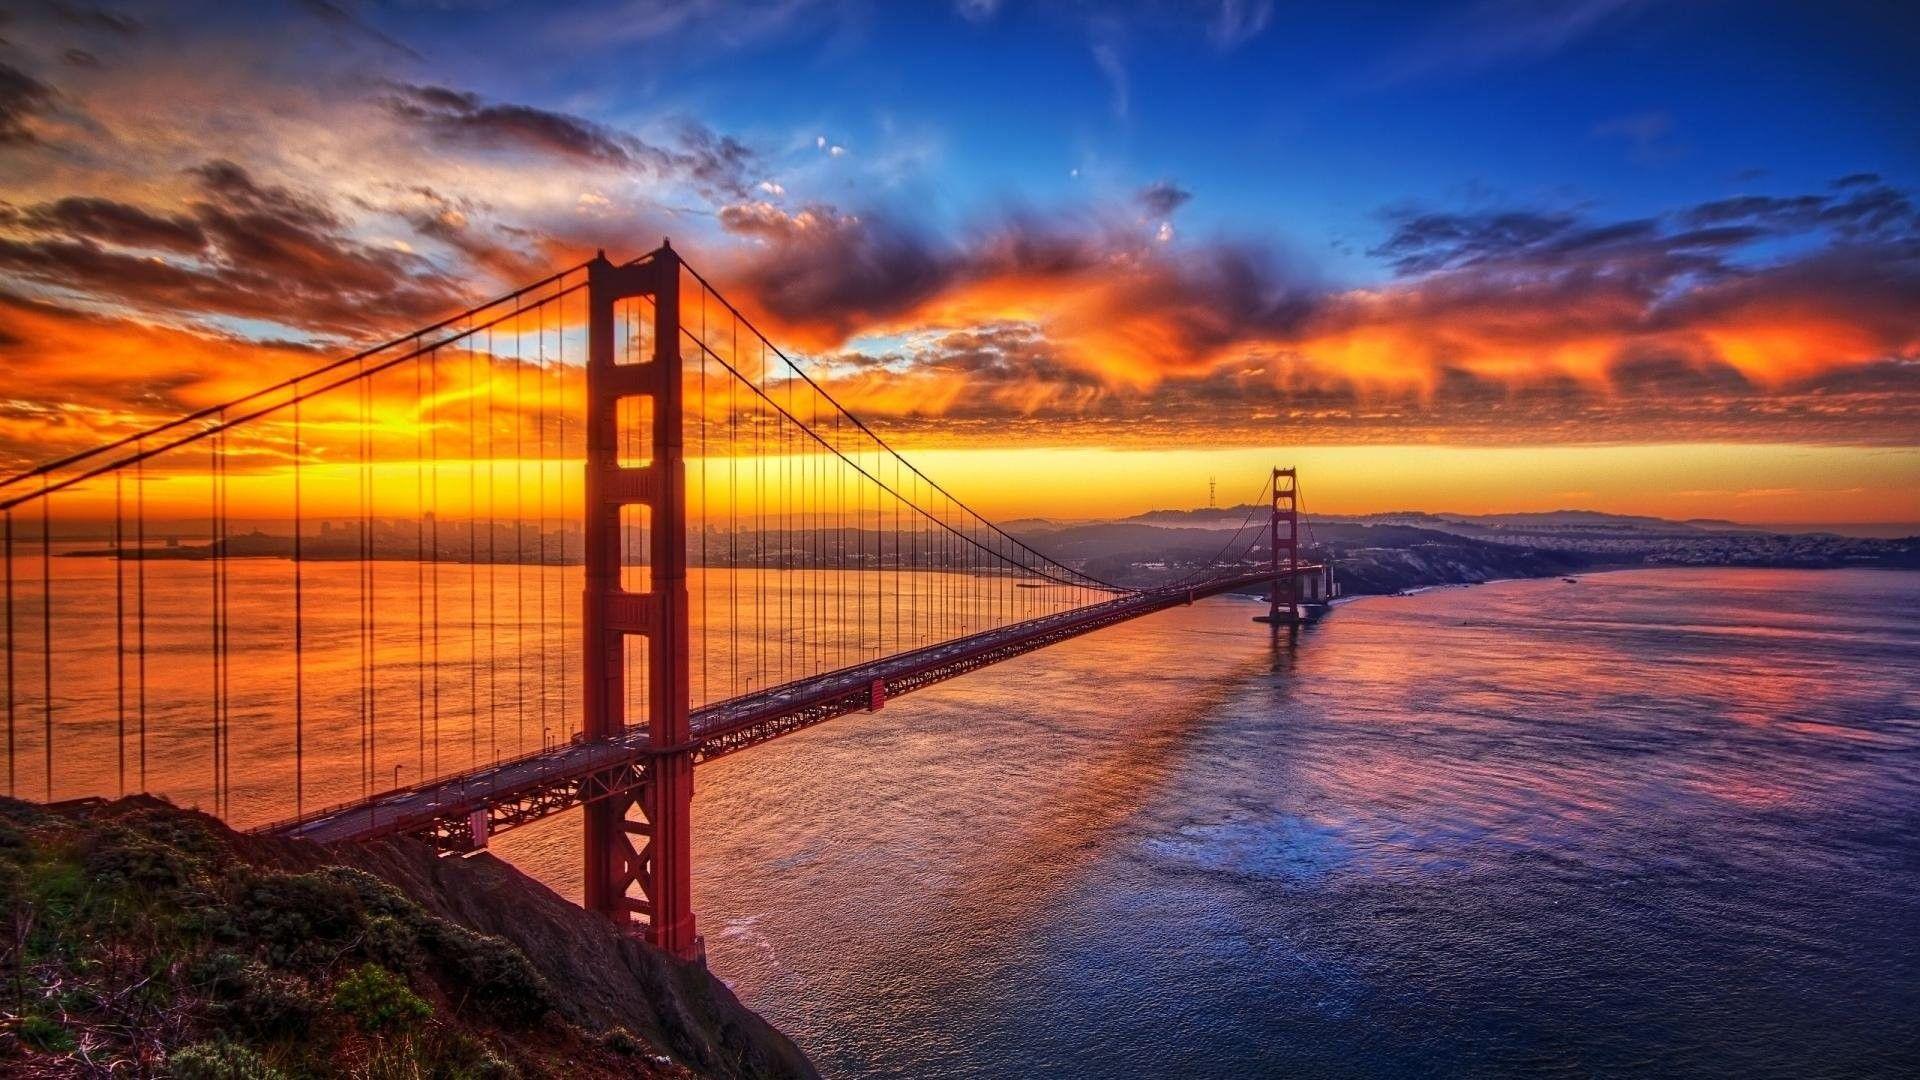 Golden Gate Bridge Sunset Wallpapers - Top Free Golden Gate Bridge